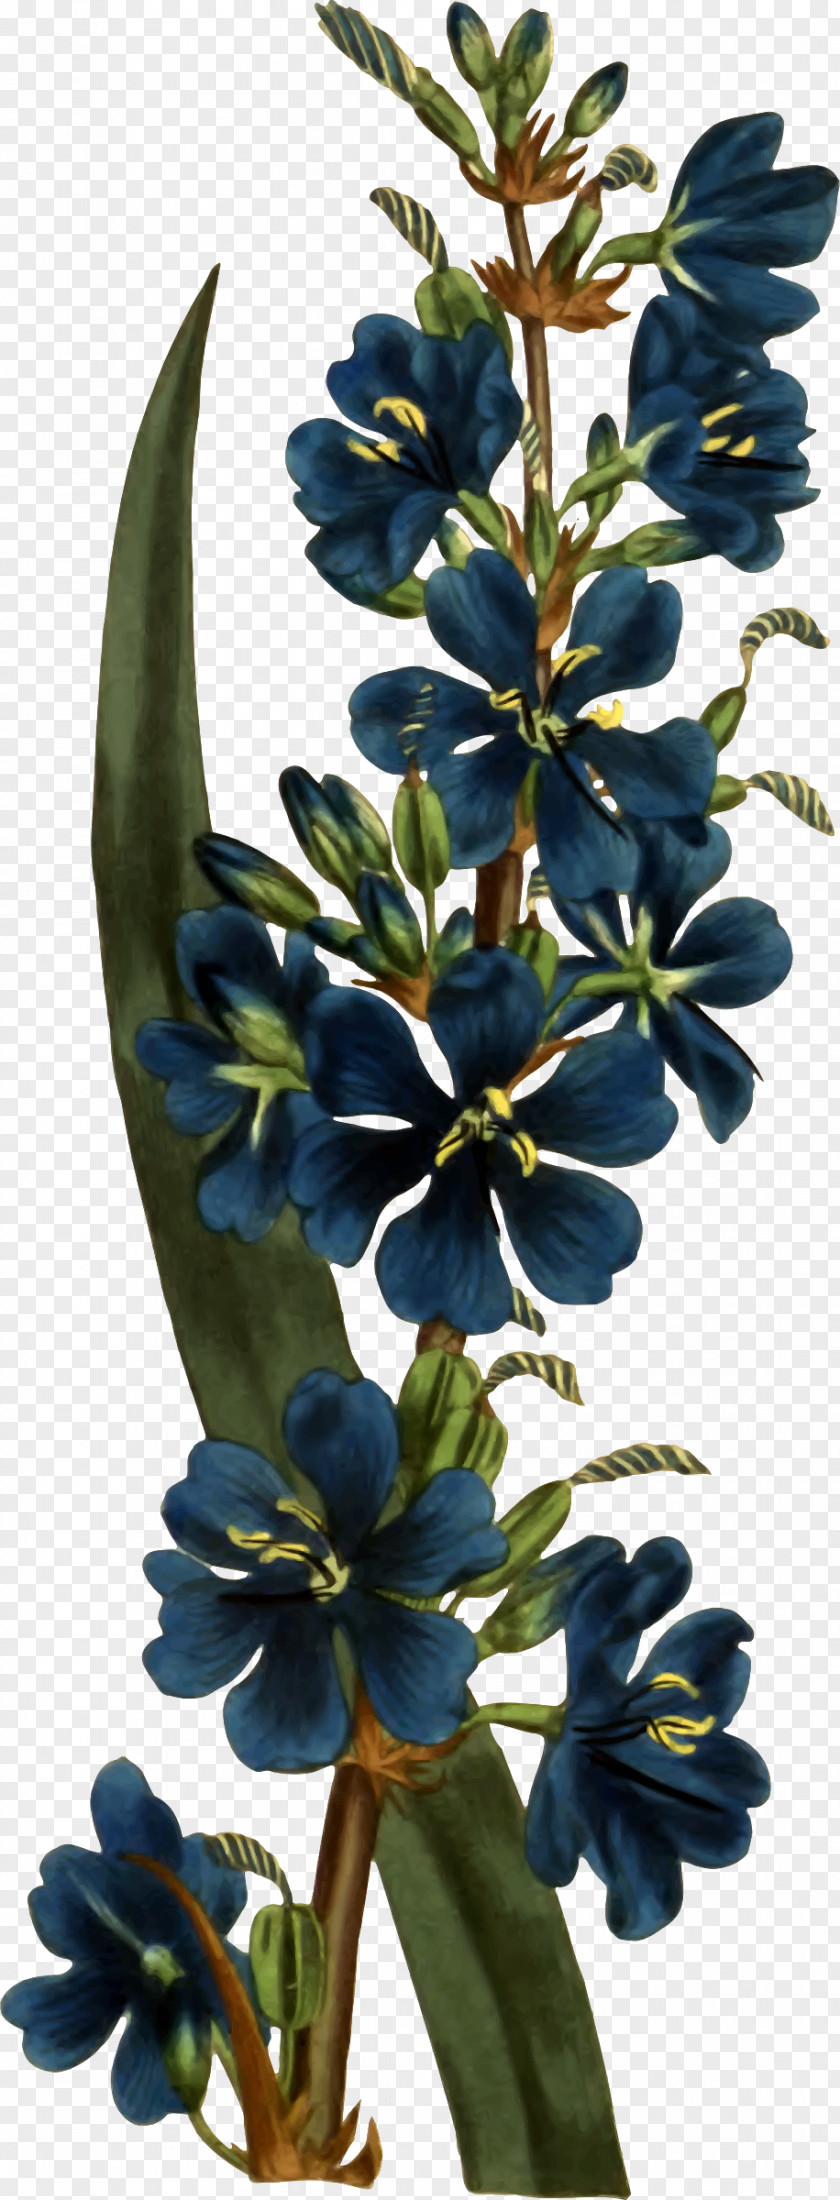 Edible Goods Aristea Botany The Woody Iridaceae: Nivenia, Klattia & Witsenia Botanical Illustration PNG